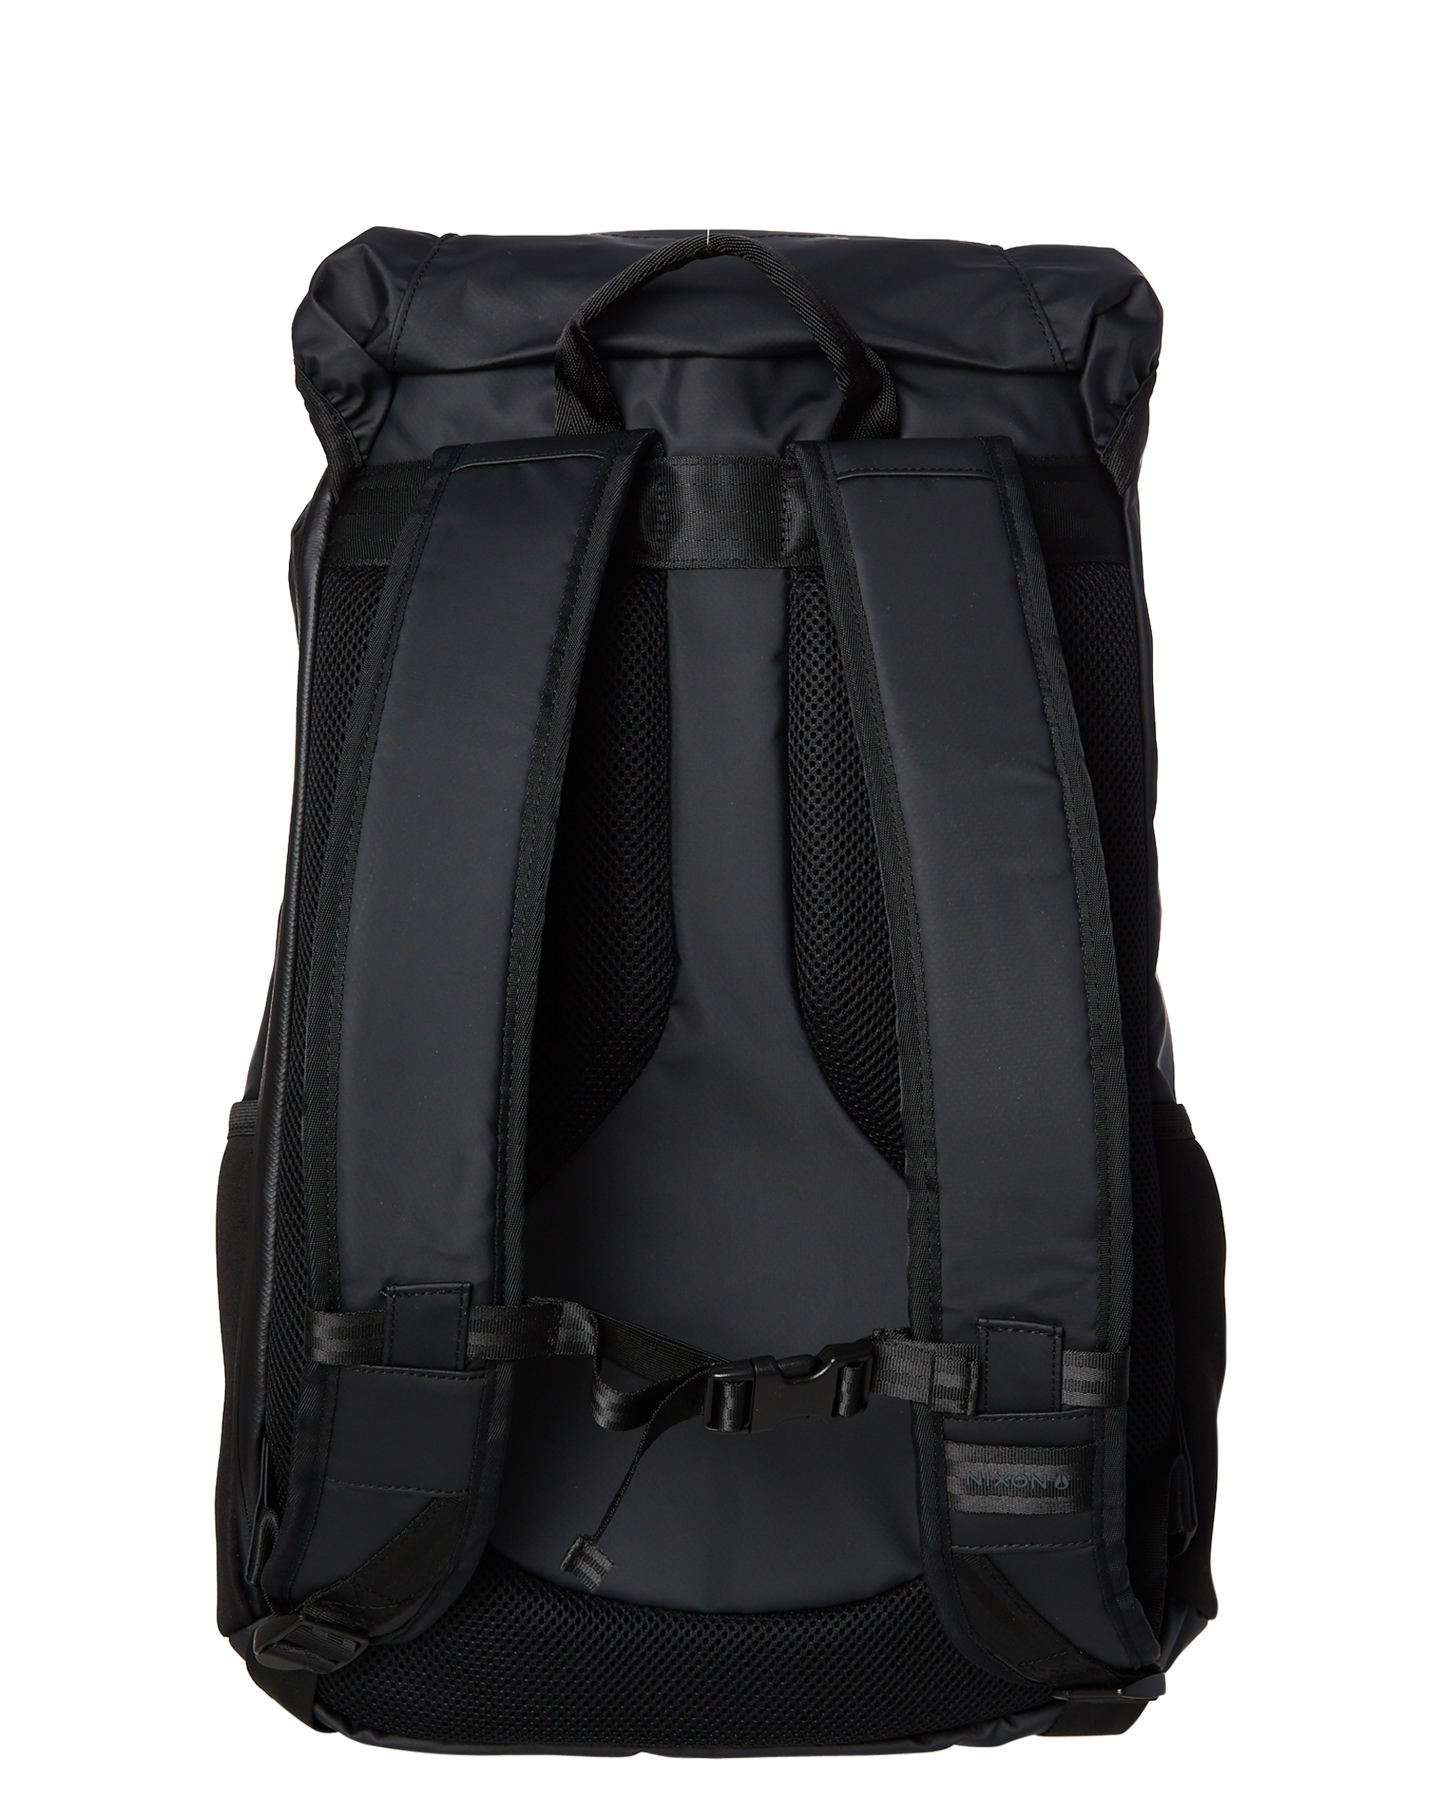 Nixon Landlock Wr 33L Backpack - All Black | SurfStitch